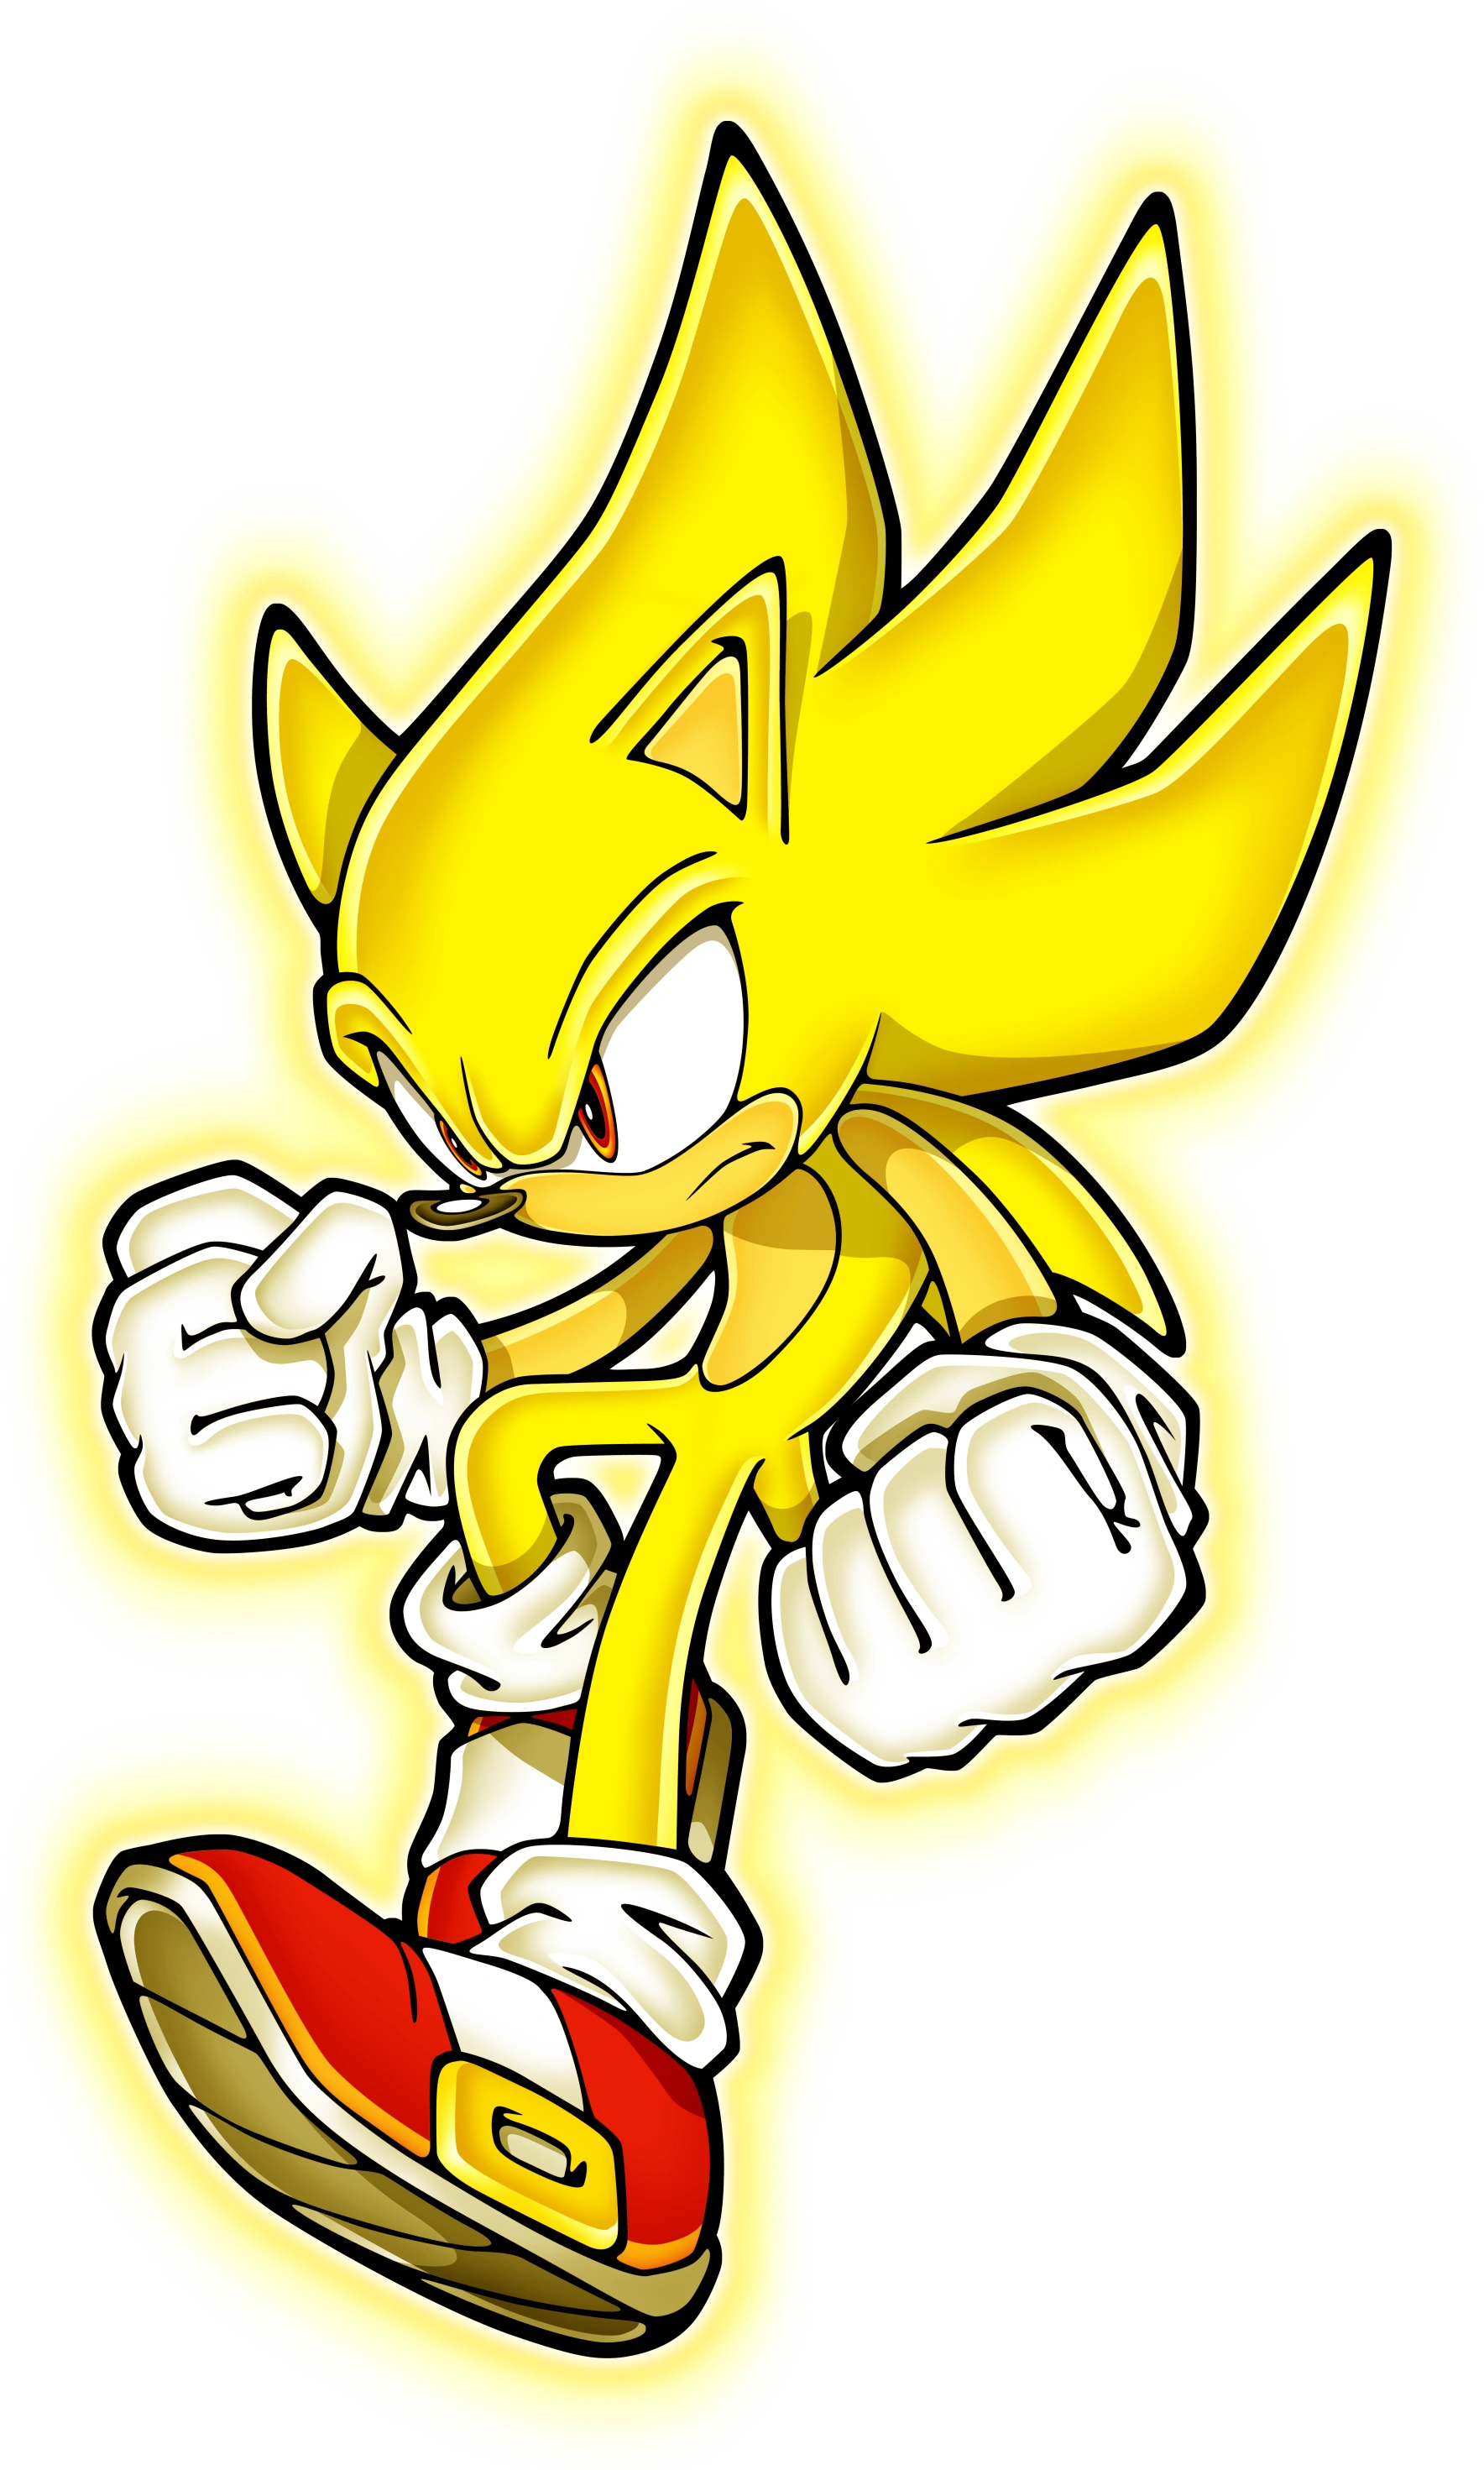 Fleetway Super Sonic vs. Super Sonic (Mainline Sonic games)